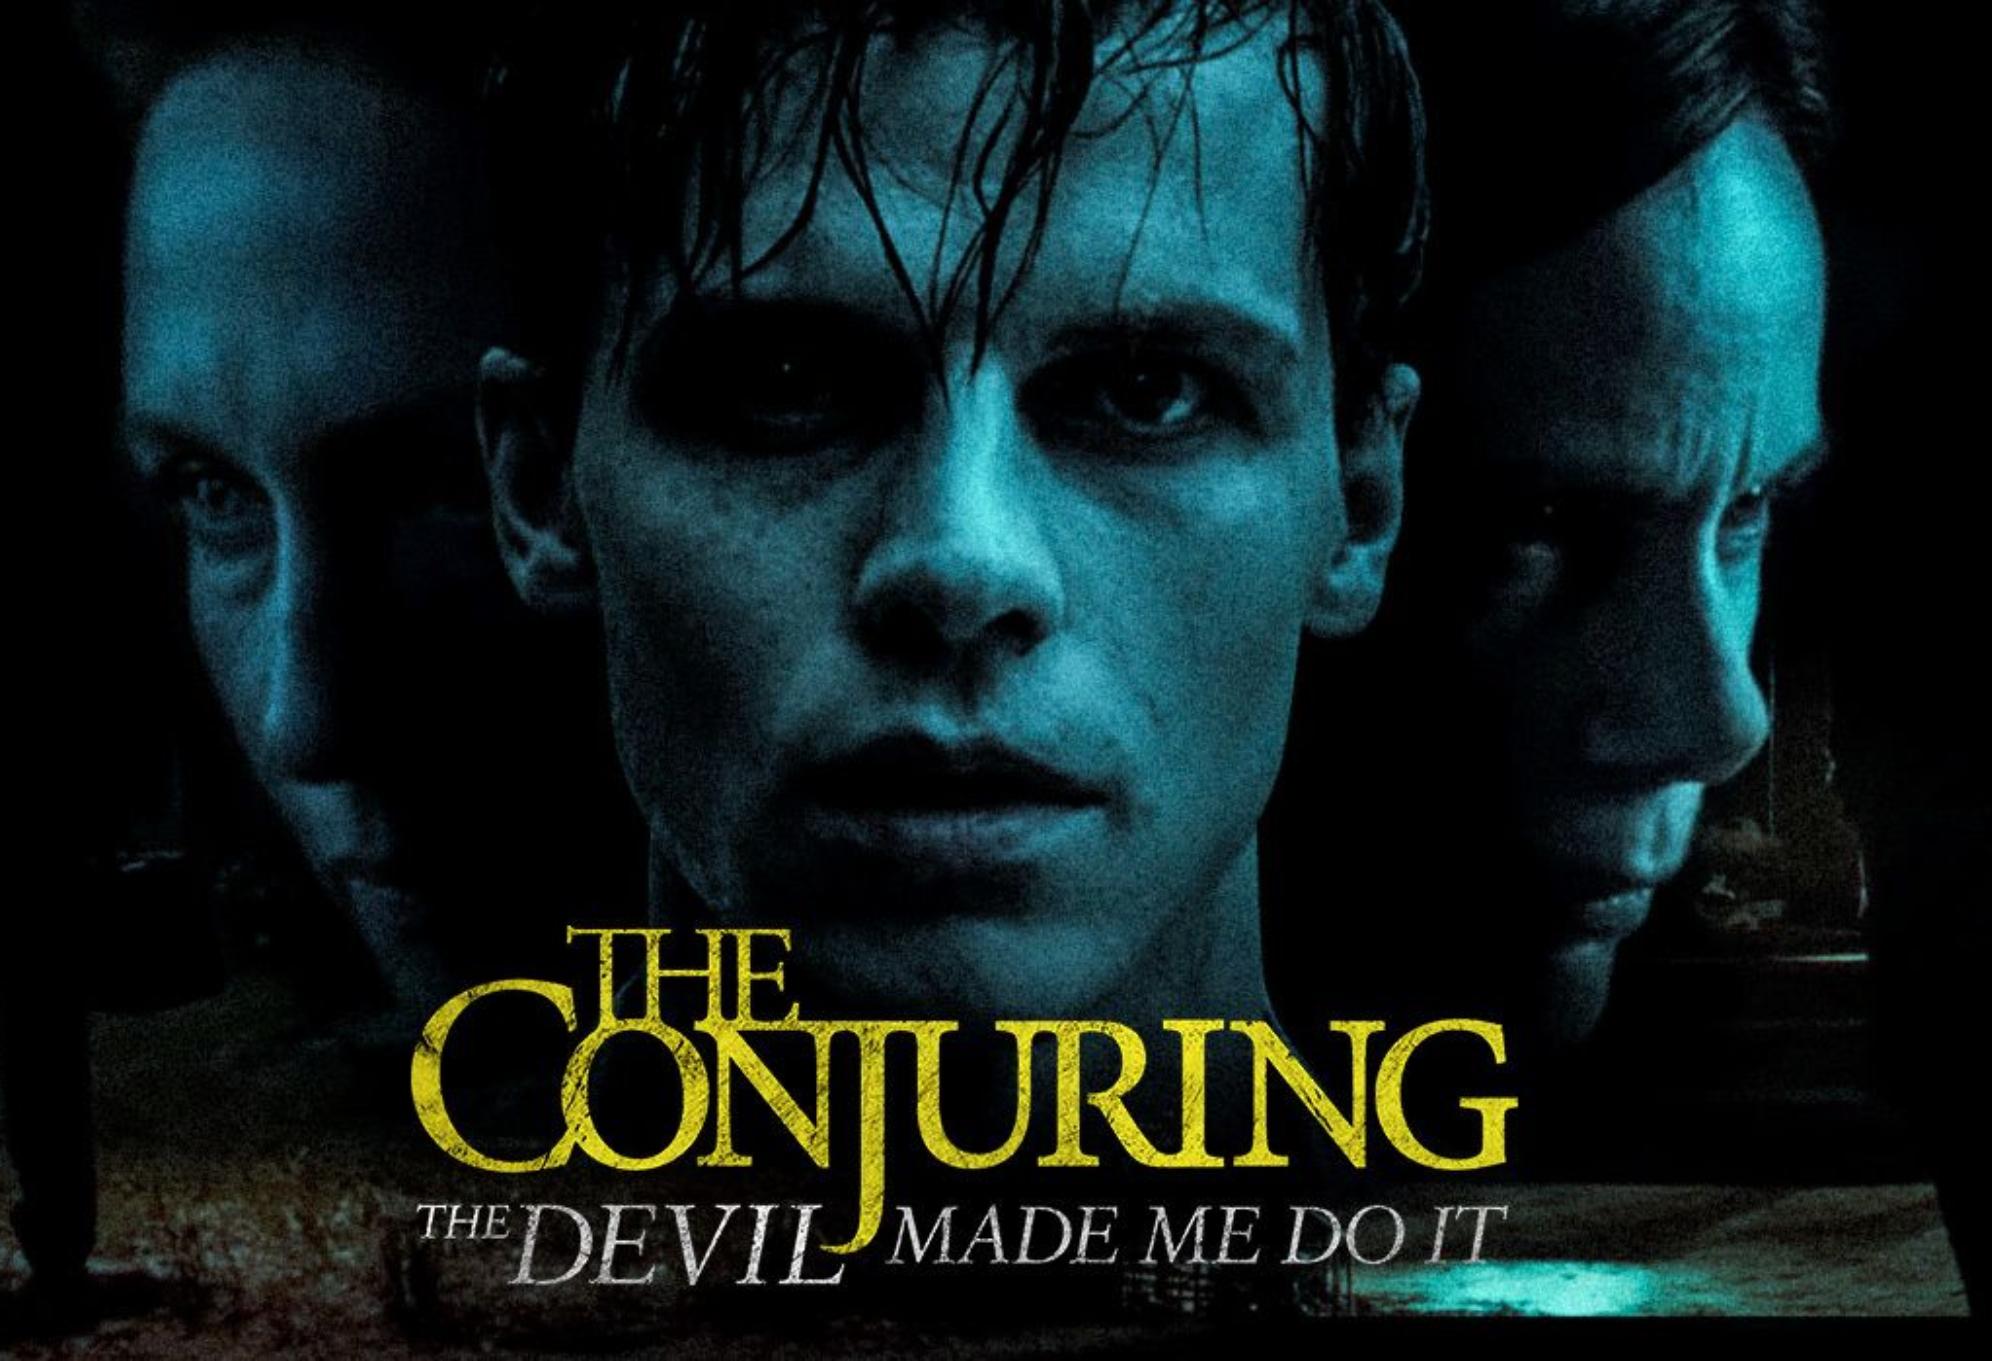 The Devil on Trial: Η αληθινή ιστορία πίσω από την τρίτη ταινία Conjuring – Η πρώτη δίκη που ο δολοφόνος ισχυρίστηκε “Δαιμονική κατοχή”